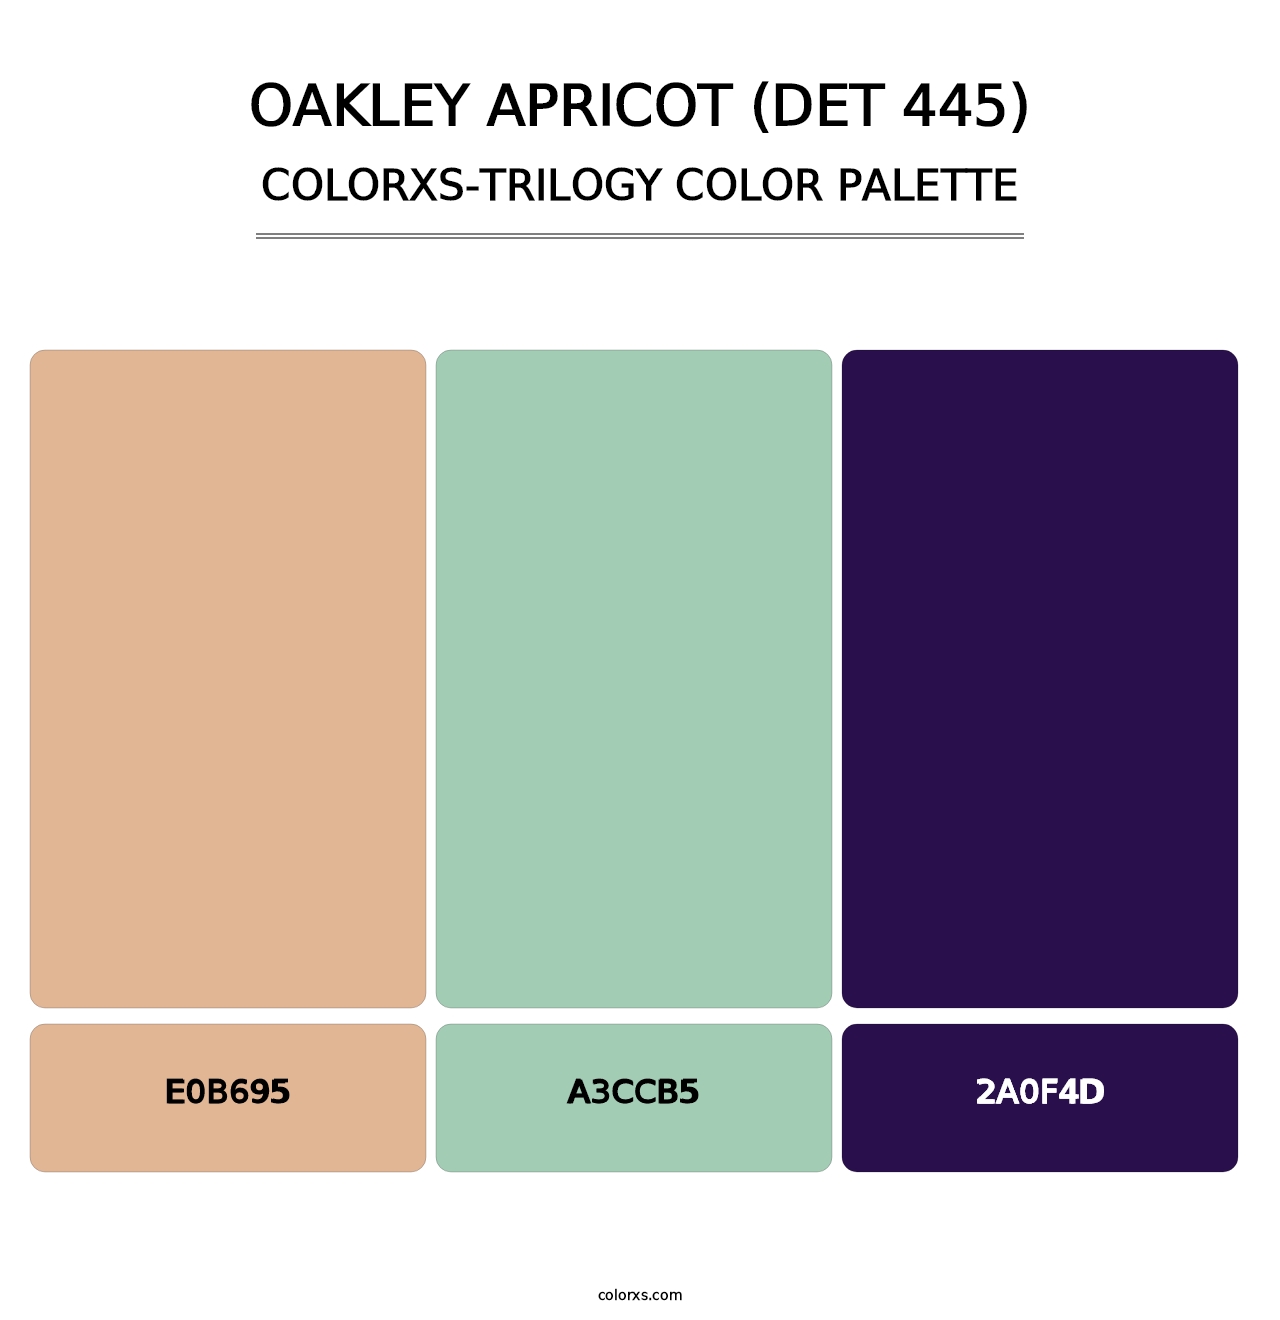 Oakley Apricot (DET 445) - Colorxs Trilogy Palette